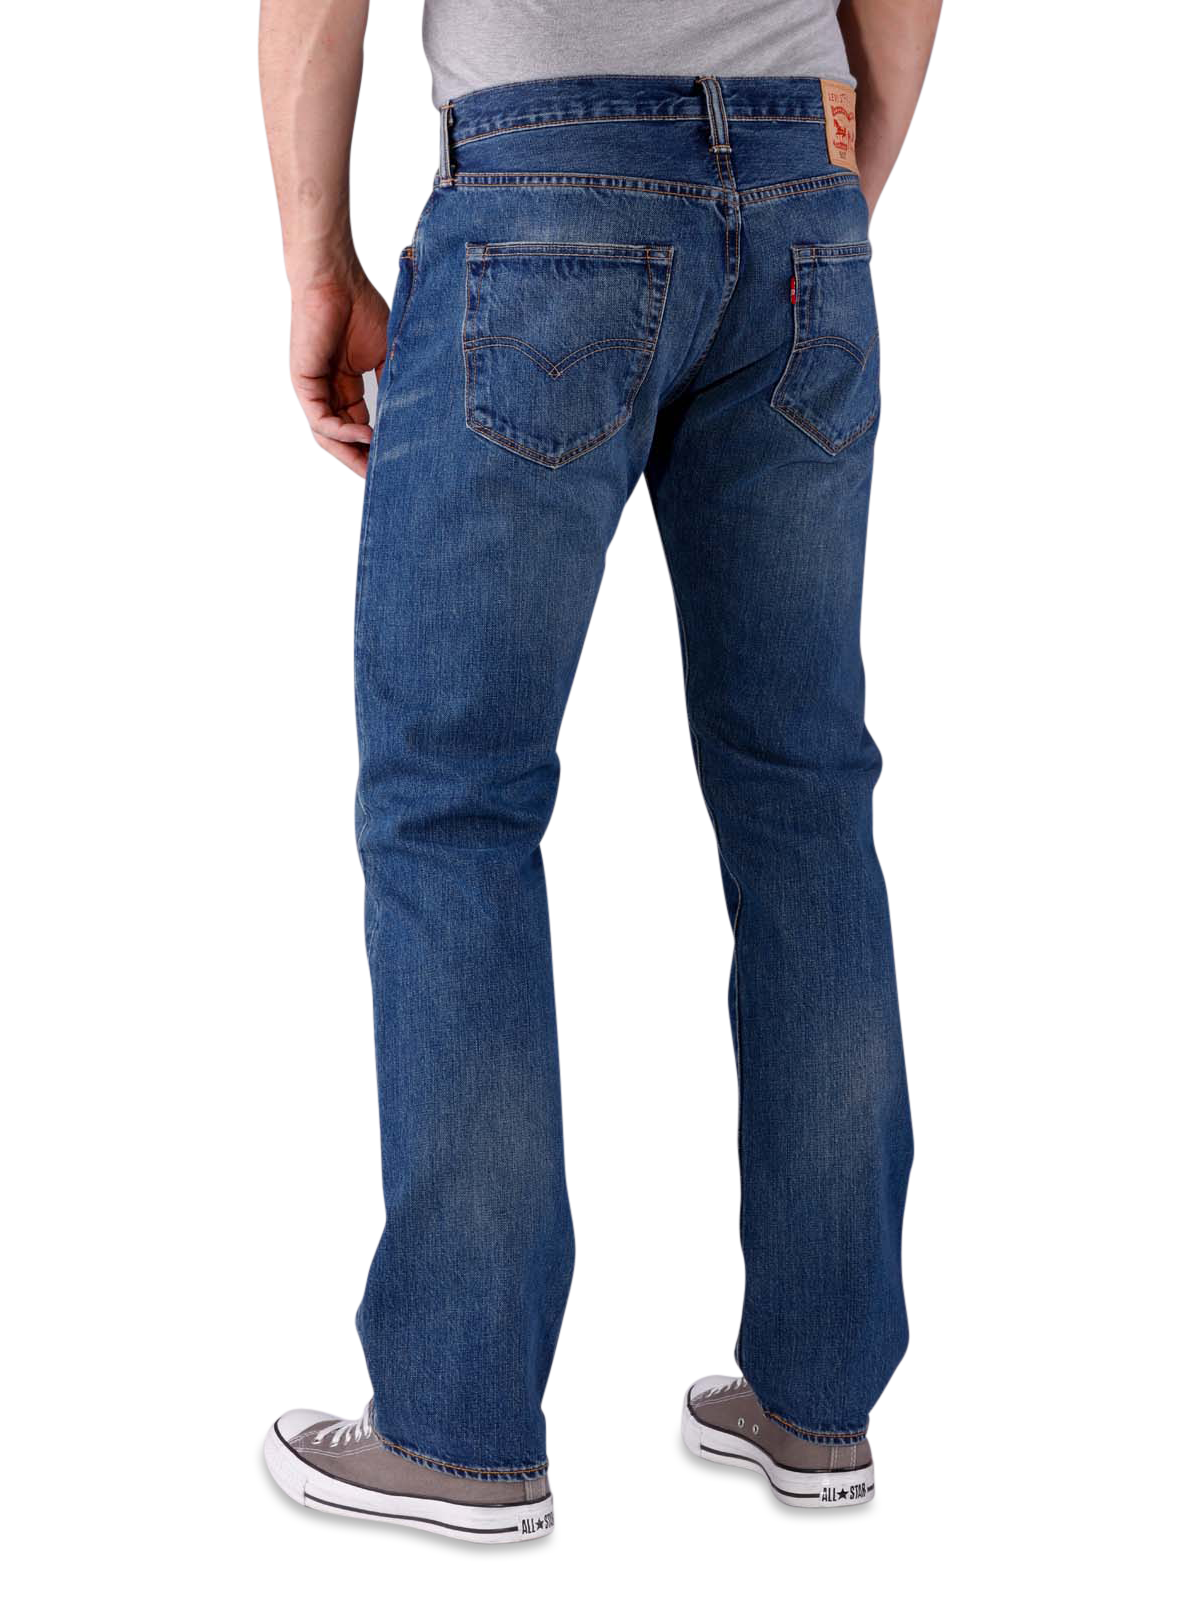 Levi‘s 501 Jeans hook | Gratis Lieferung - JEANS.CH - Levi Strauss 501 Jeans